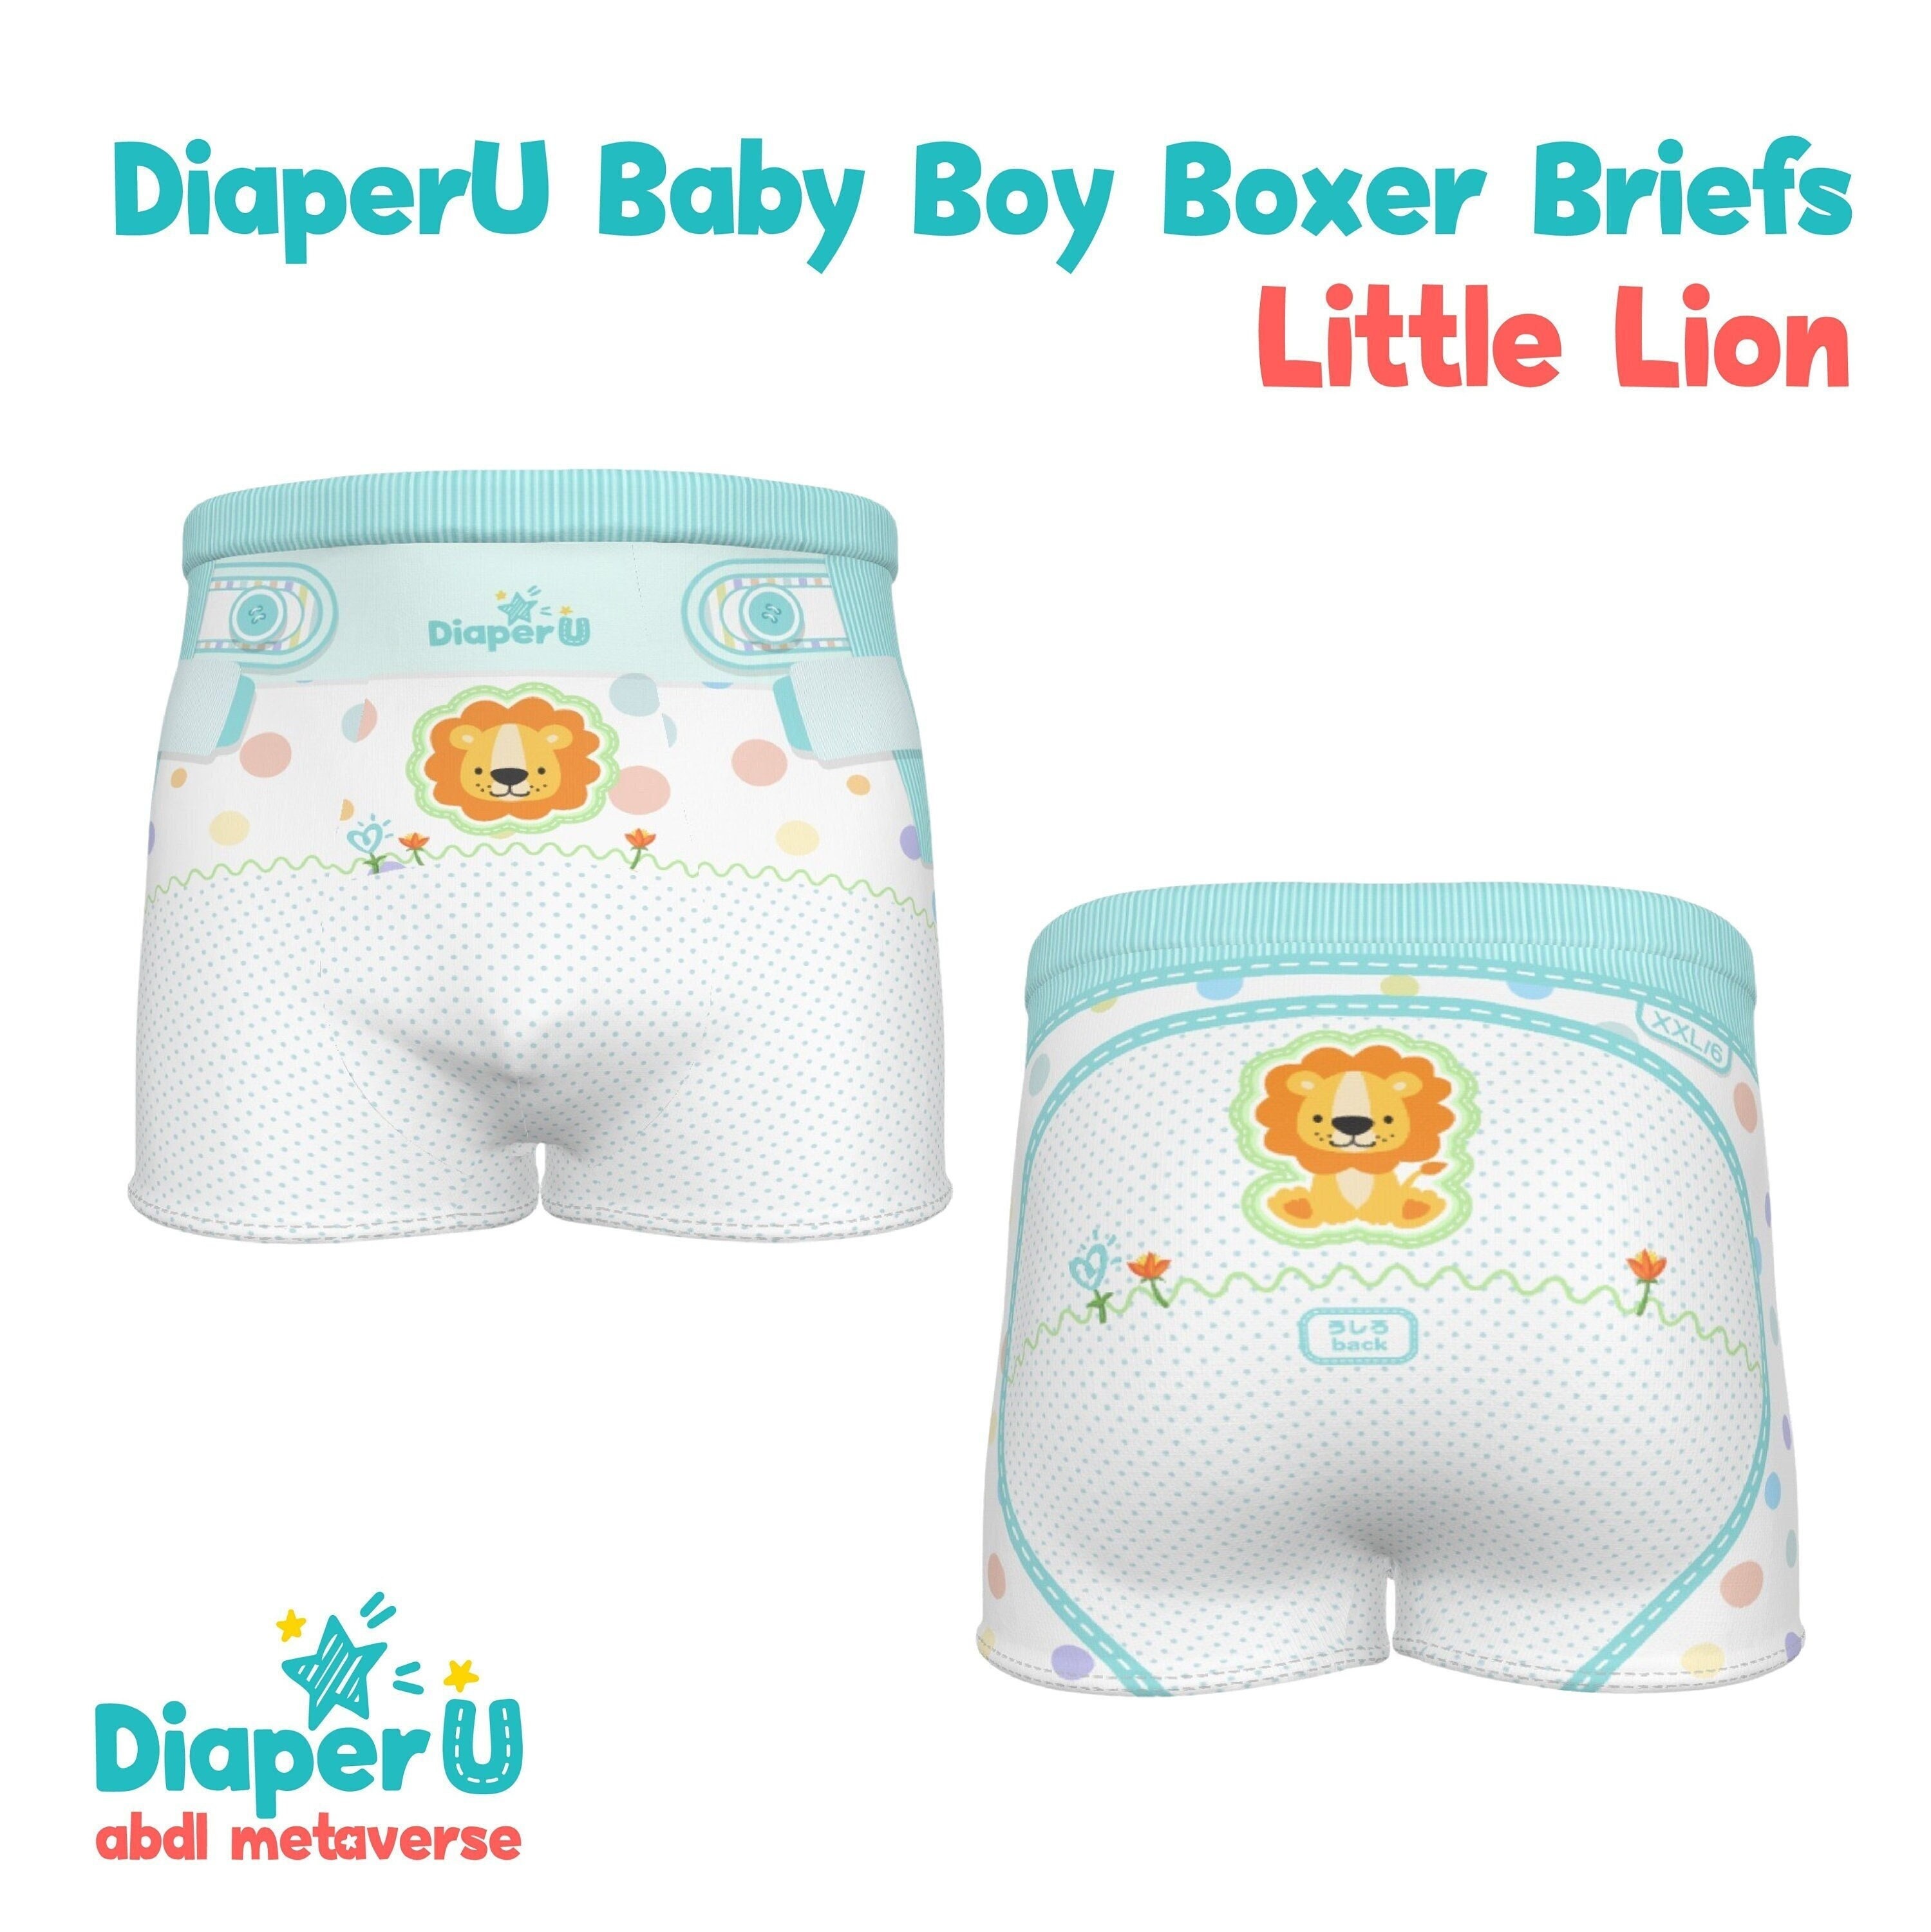 ABDL Adult Baby Diaper Style Briefs Little Lion 